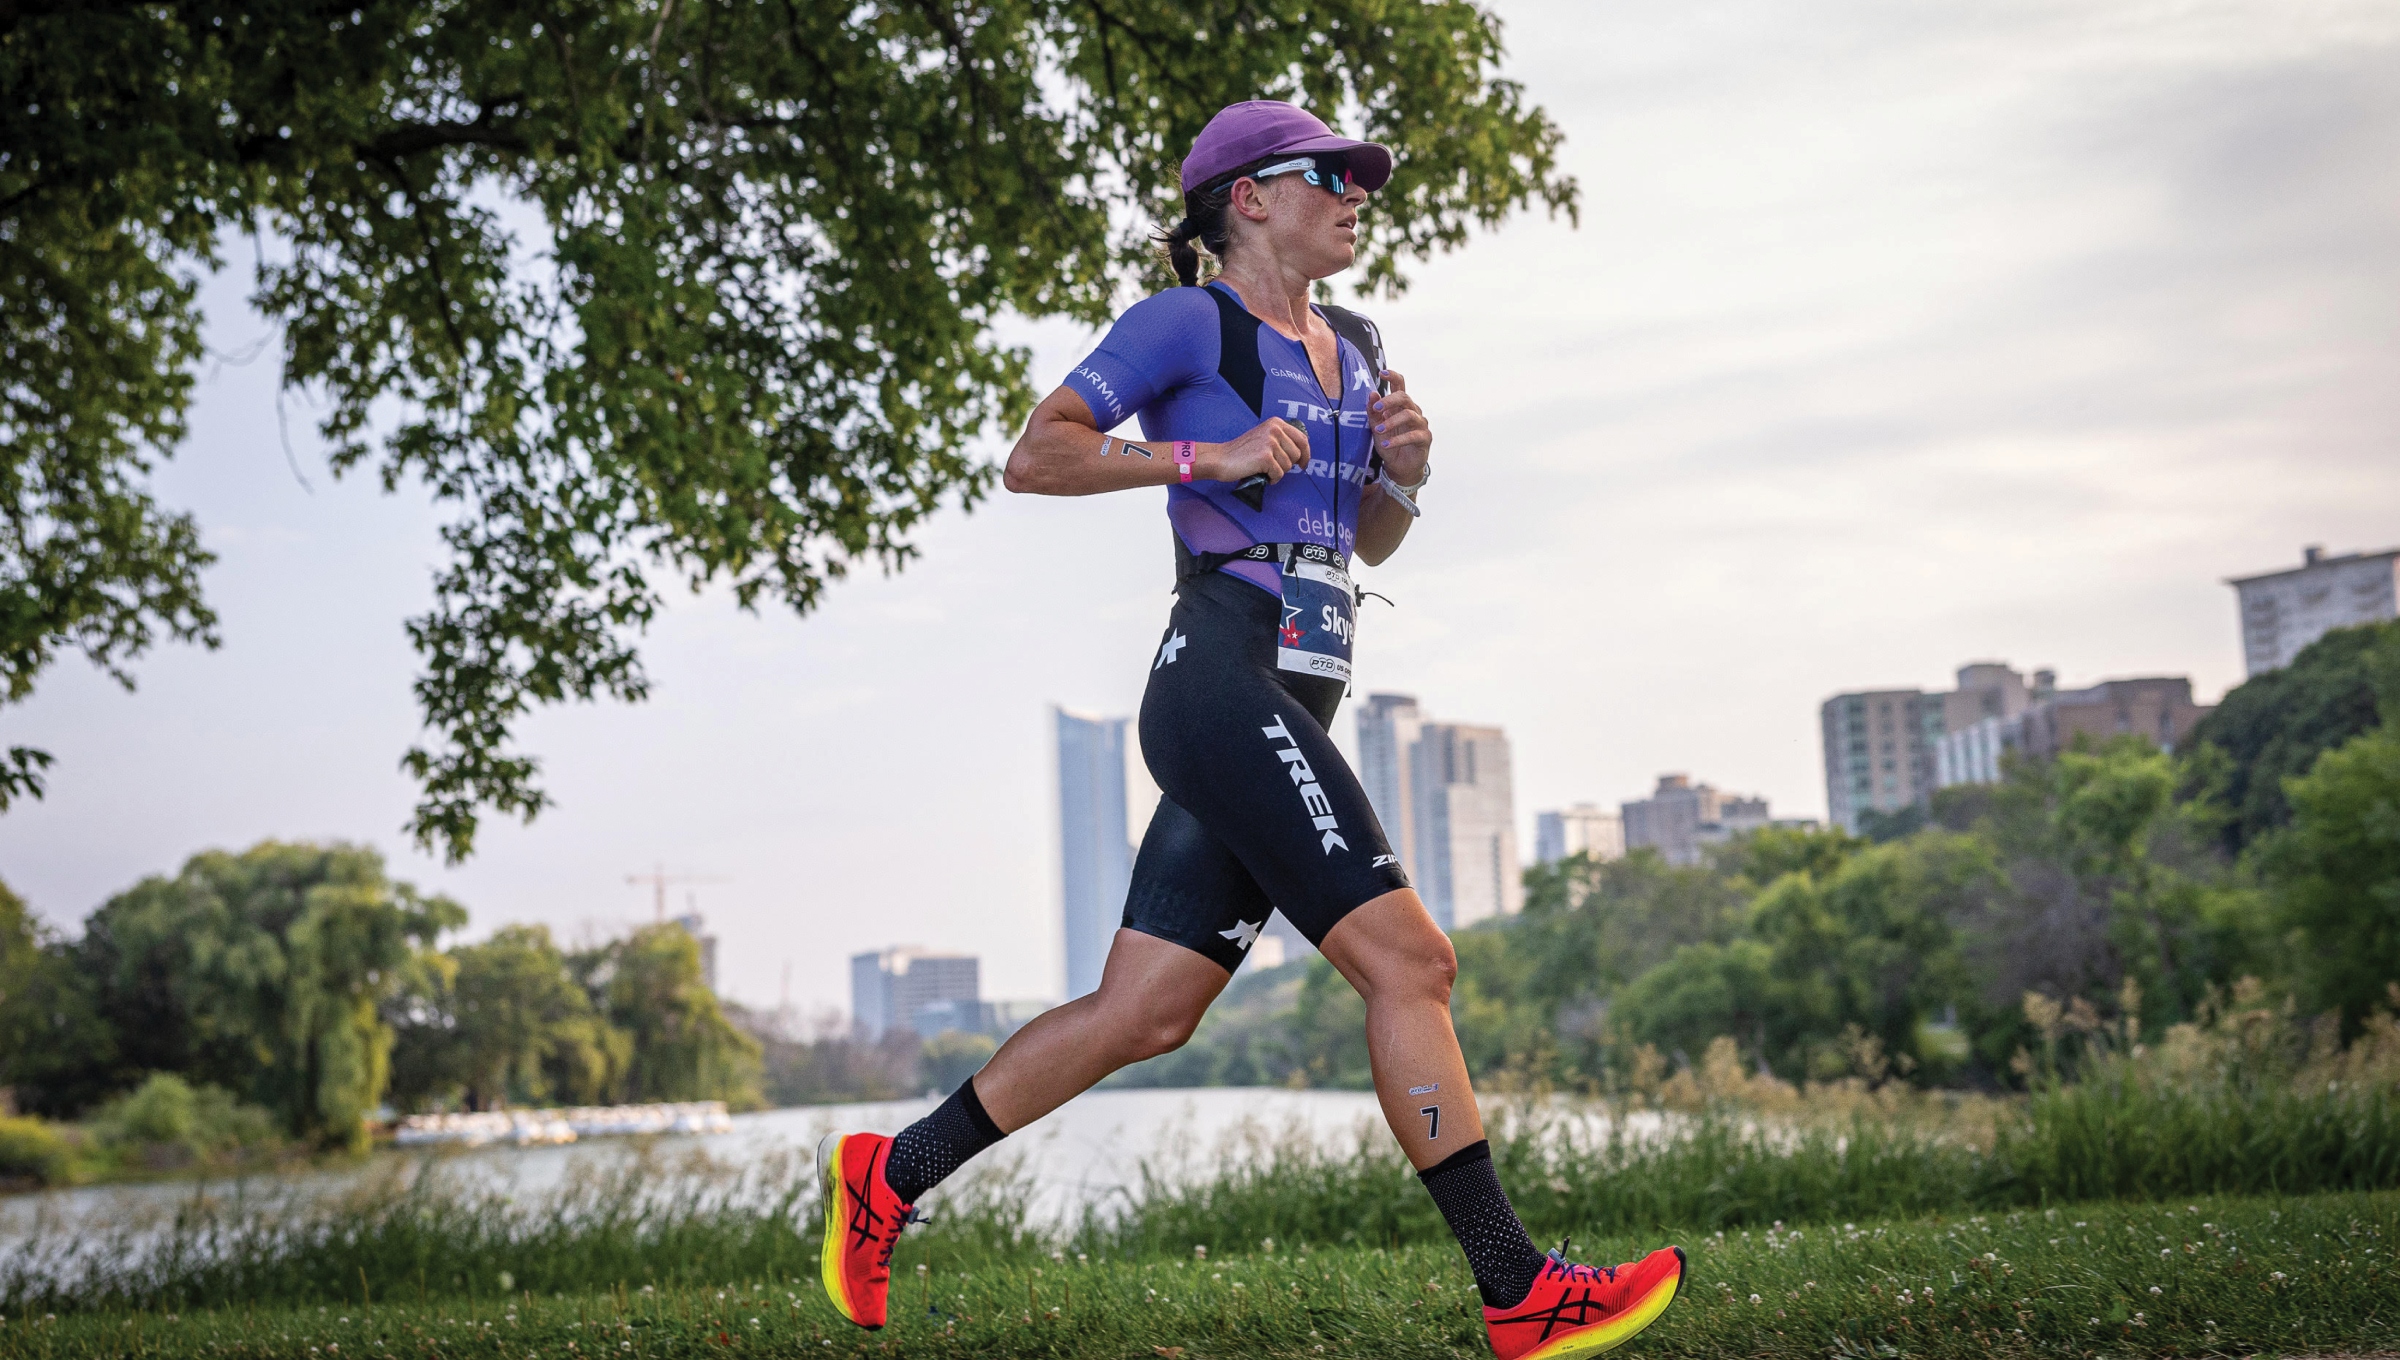 Professional triathlete Skye Moench runs in a purple triathlon suite during a triathlon race.